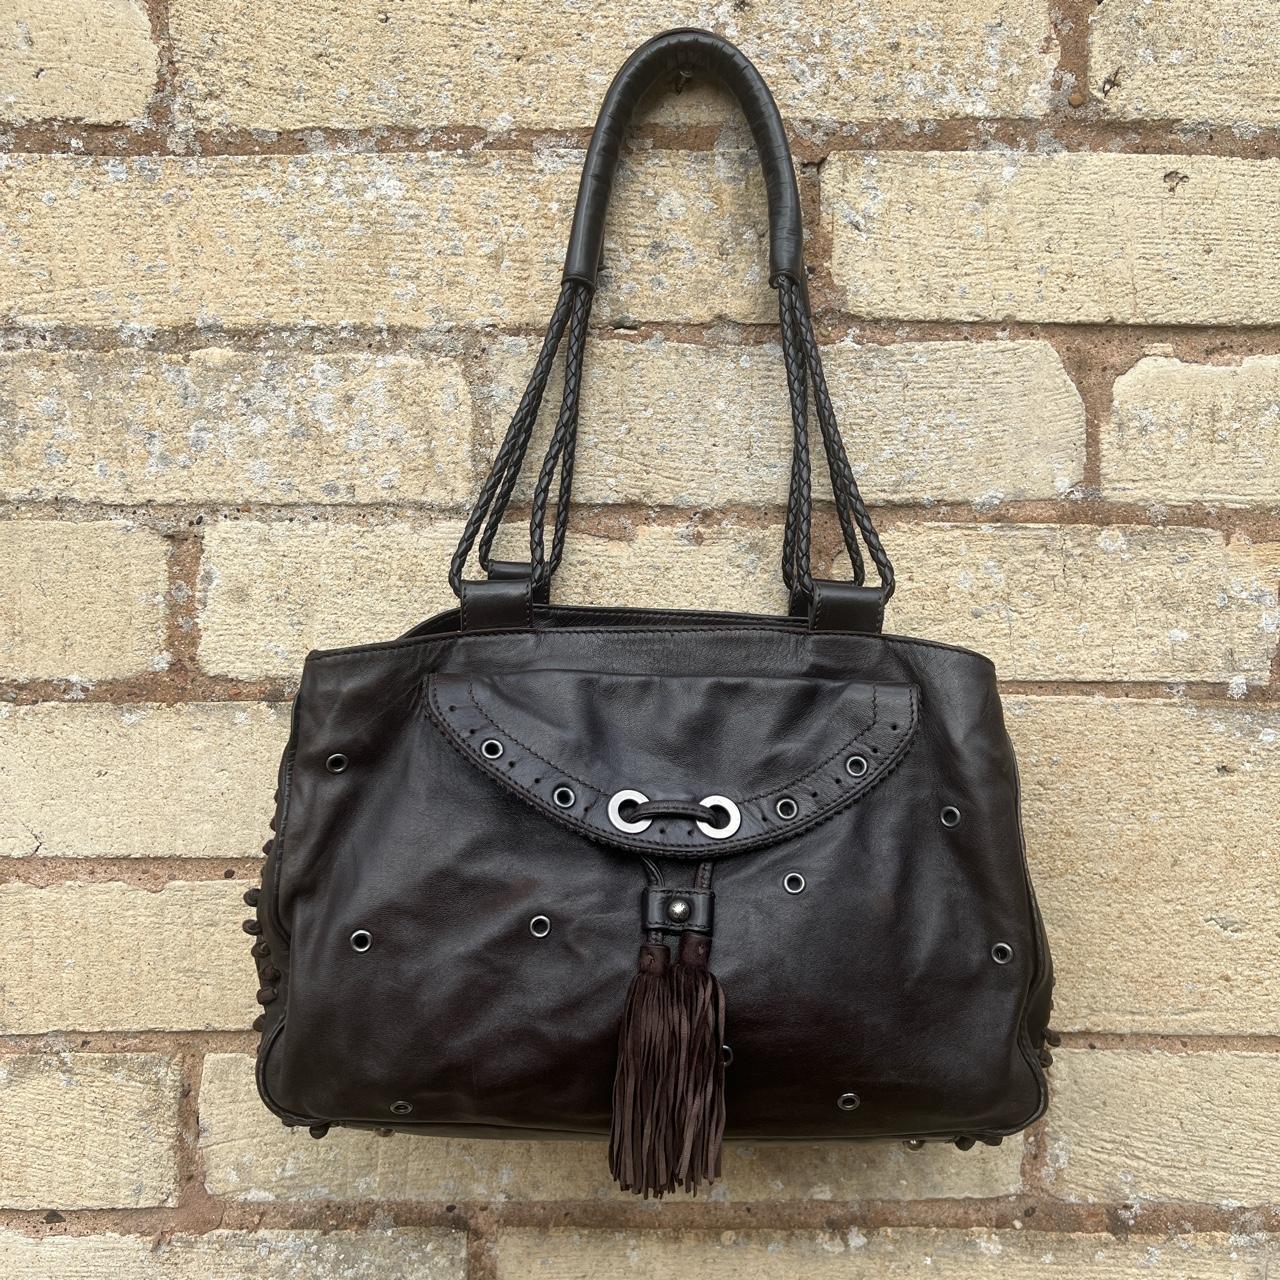 Pringle brown leather handbag with plaited leather... - Depop